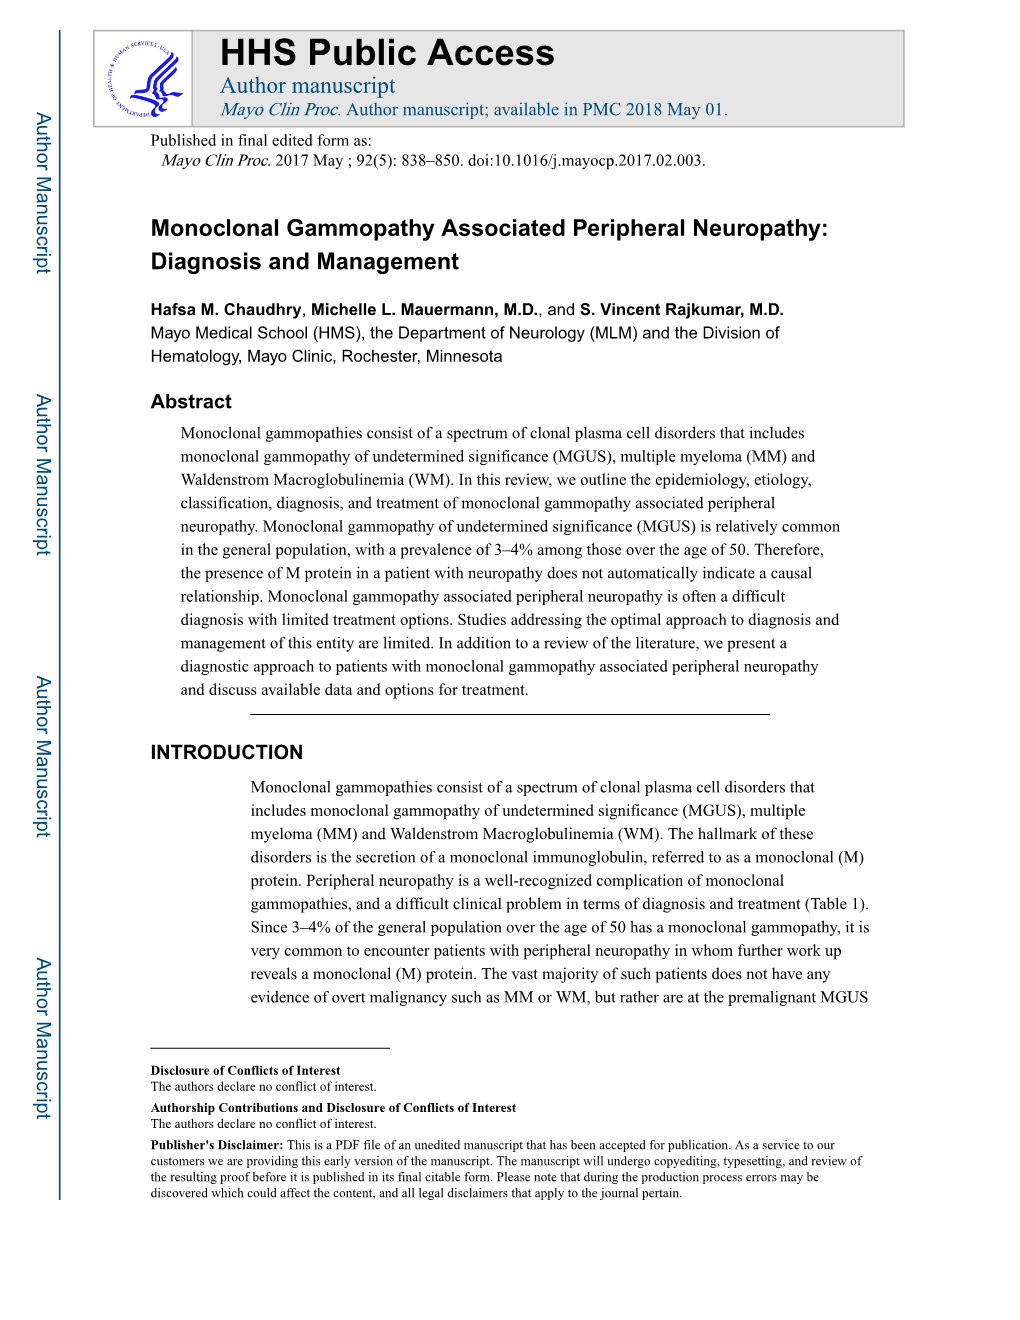 Monoclonal Gammopathy Associated Peripheral Neuropathy: Diagnosis and Management